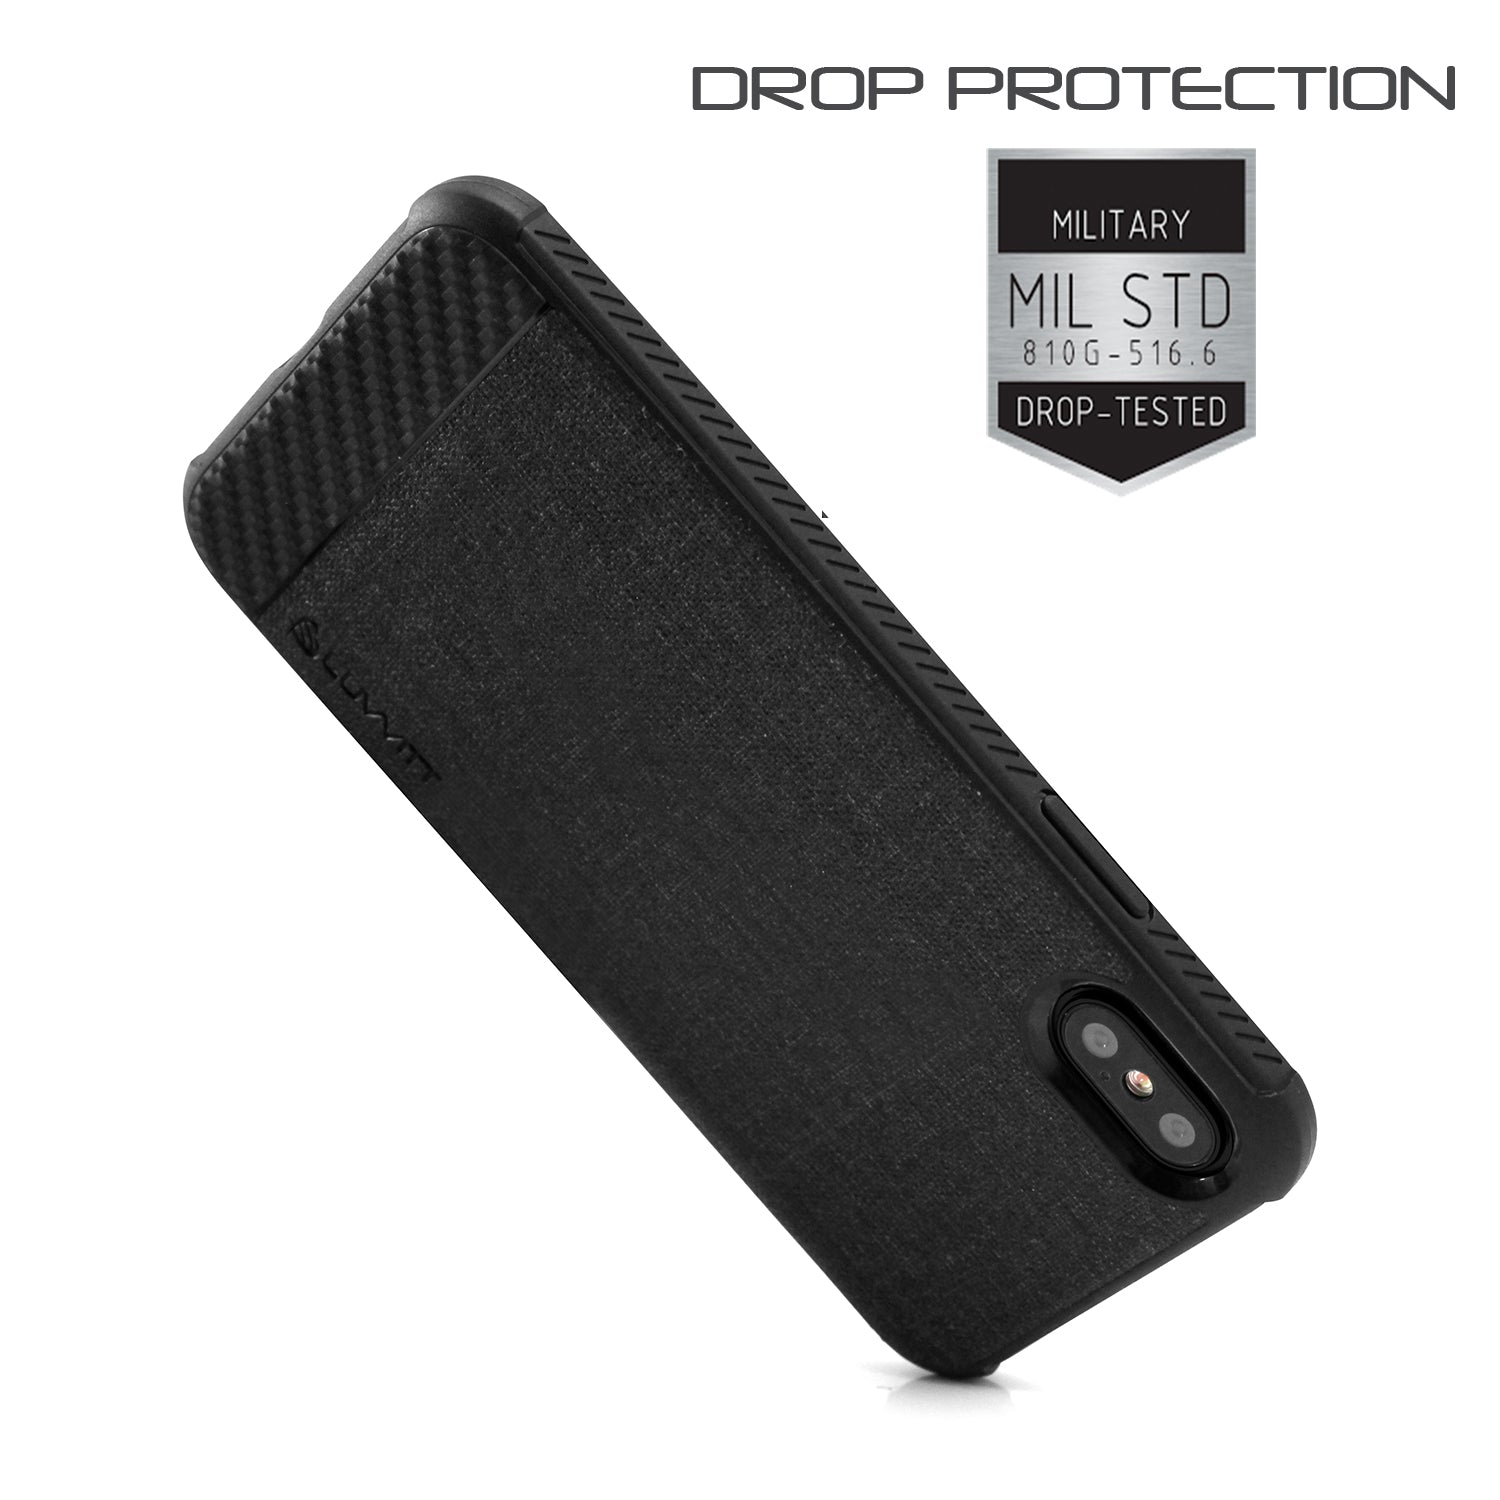 Luvvitt Sleek Armor Case with Fabric for iPhone X / XS - Black / Carbon Fiber